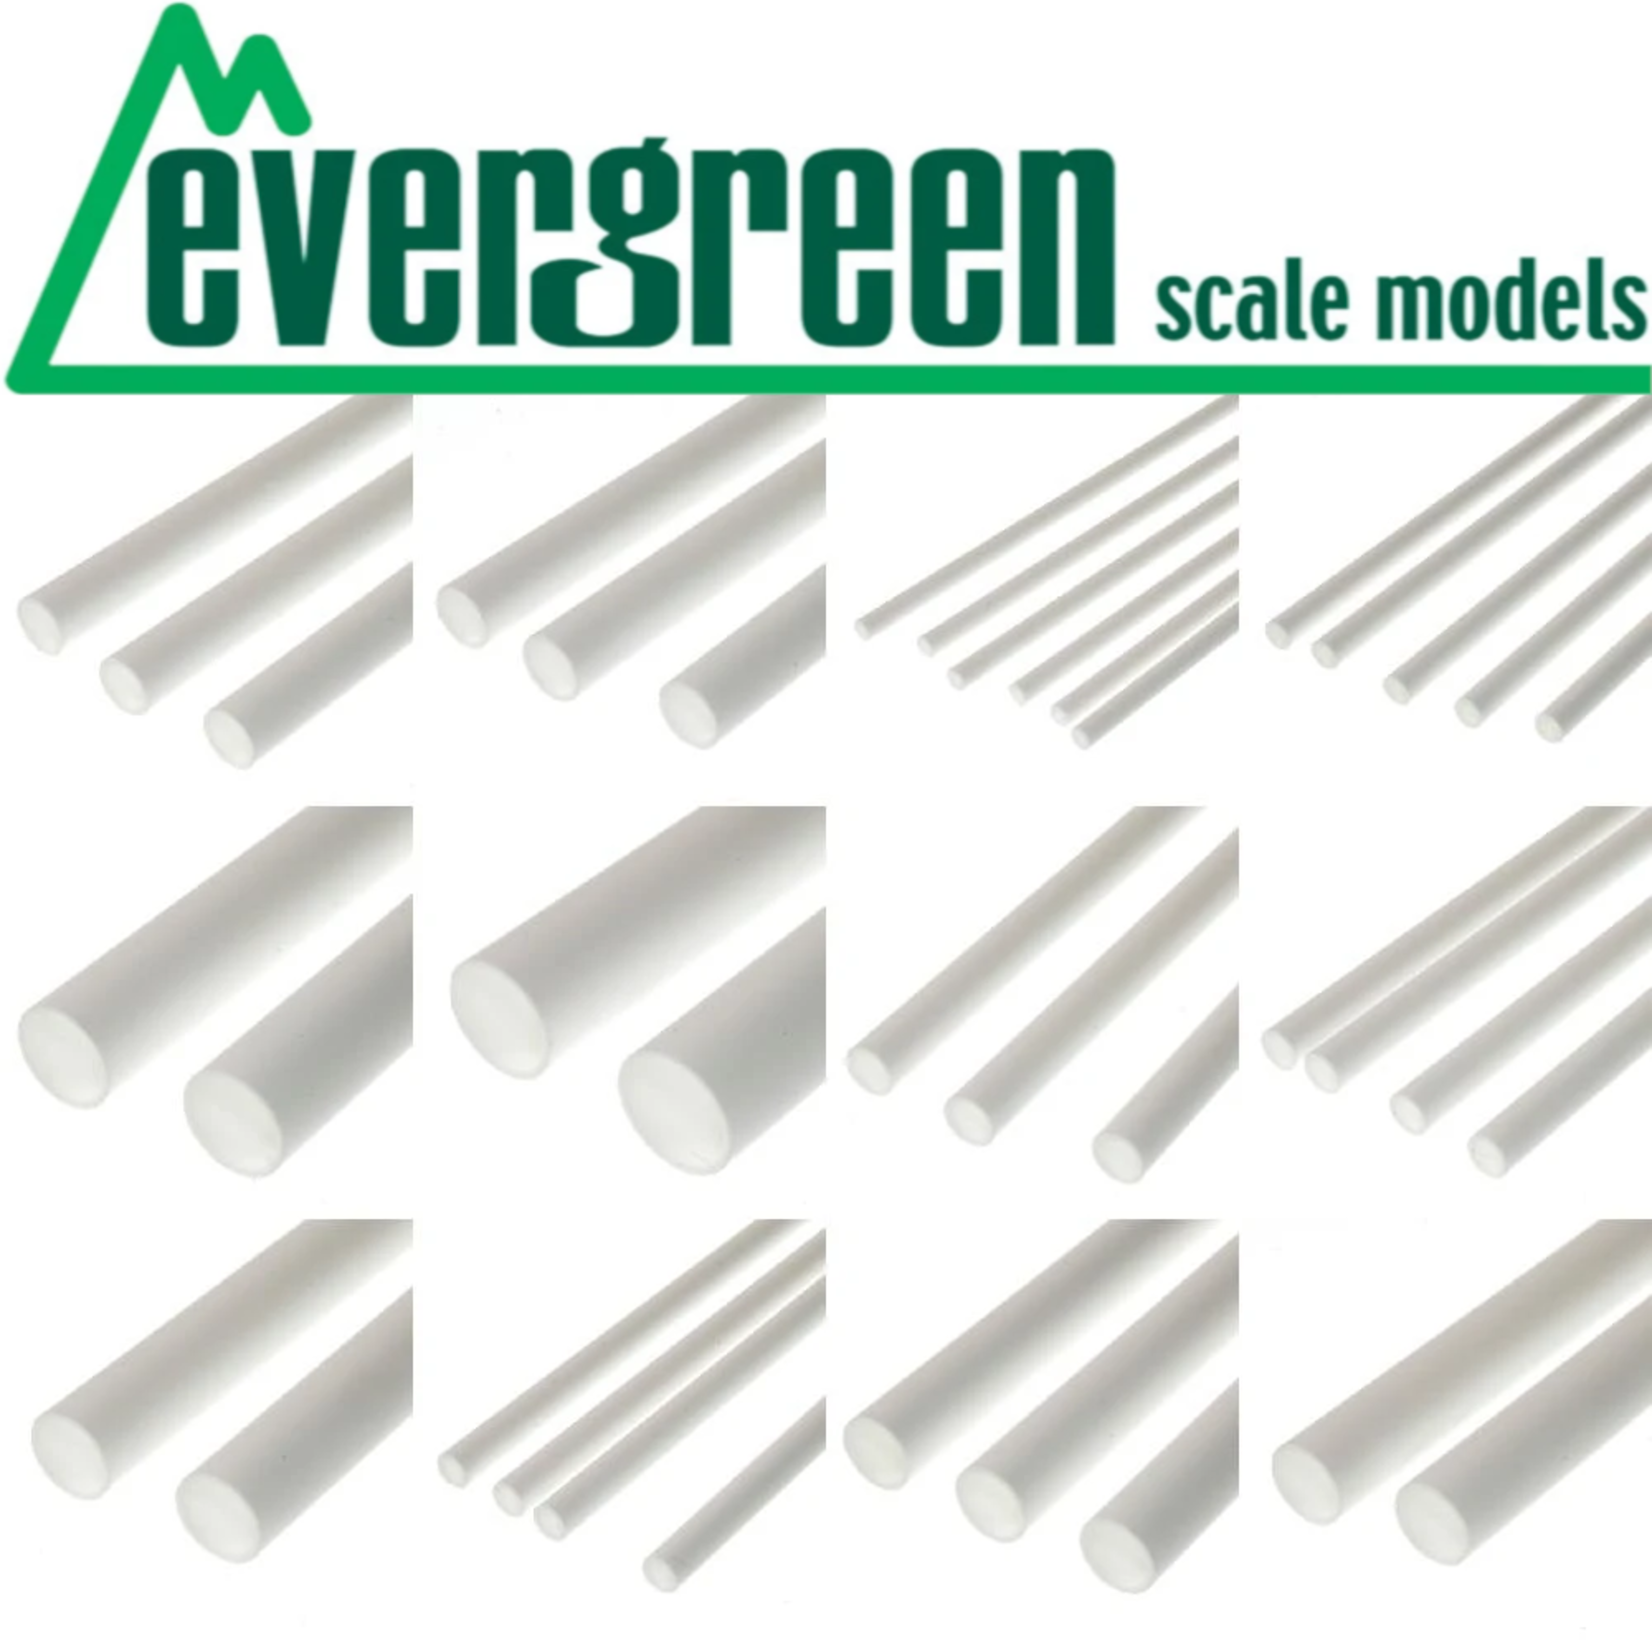 Evergreen Scale Models EVE135 Styrene .030x.100 Strip (10pc)